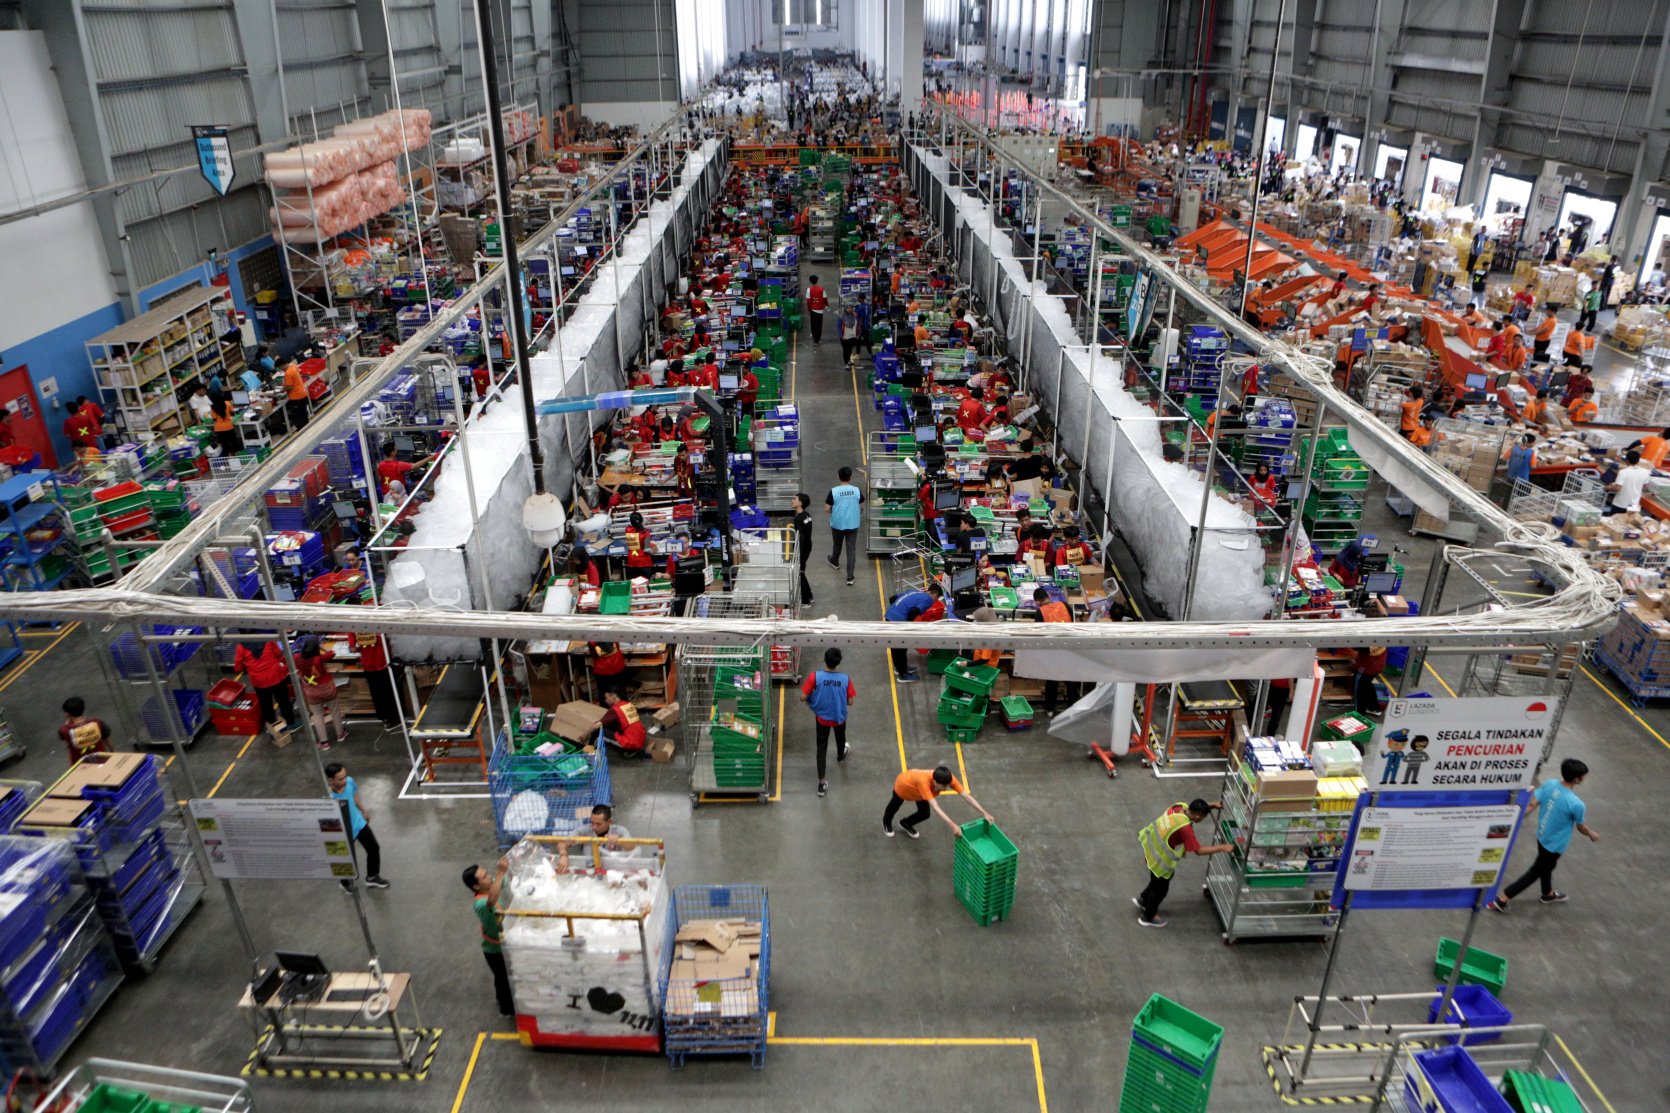 Ribuan pekerja di Warehouse Lazada, Kawasan Depok, Jawa Barat (12/11/2019). Dalam pesta belanja online 11.11, transaksi Lazada mencapai 600 ribu item per hari, meningkat tiga kali dari hari biasanya.